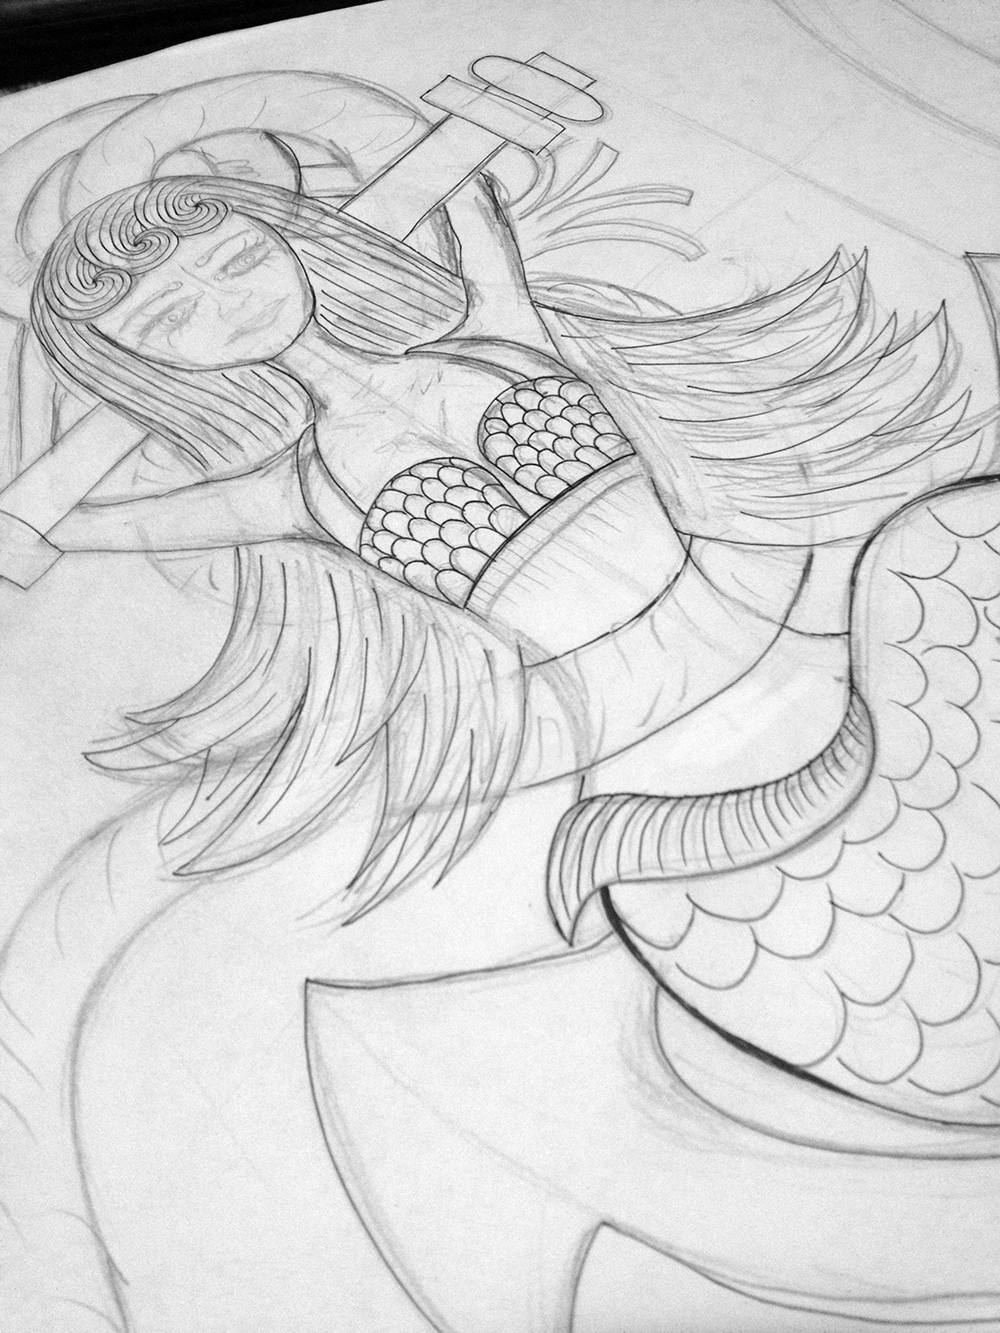 girl mermaid fish black pen Street poster rope anchor tattoo tail hair gallery